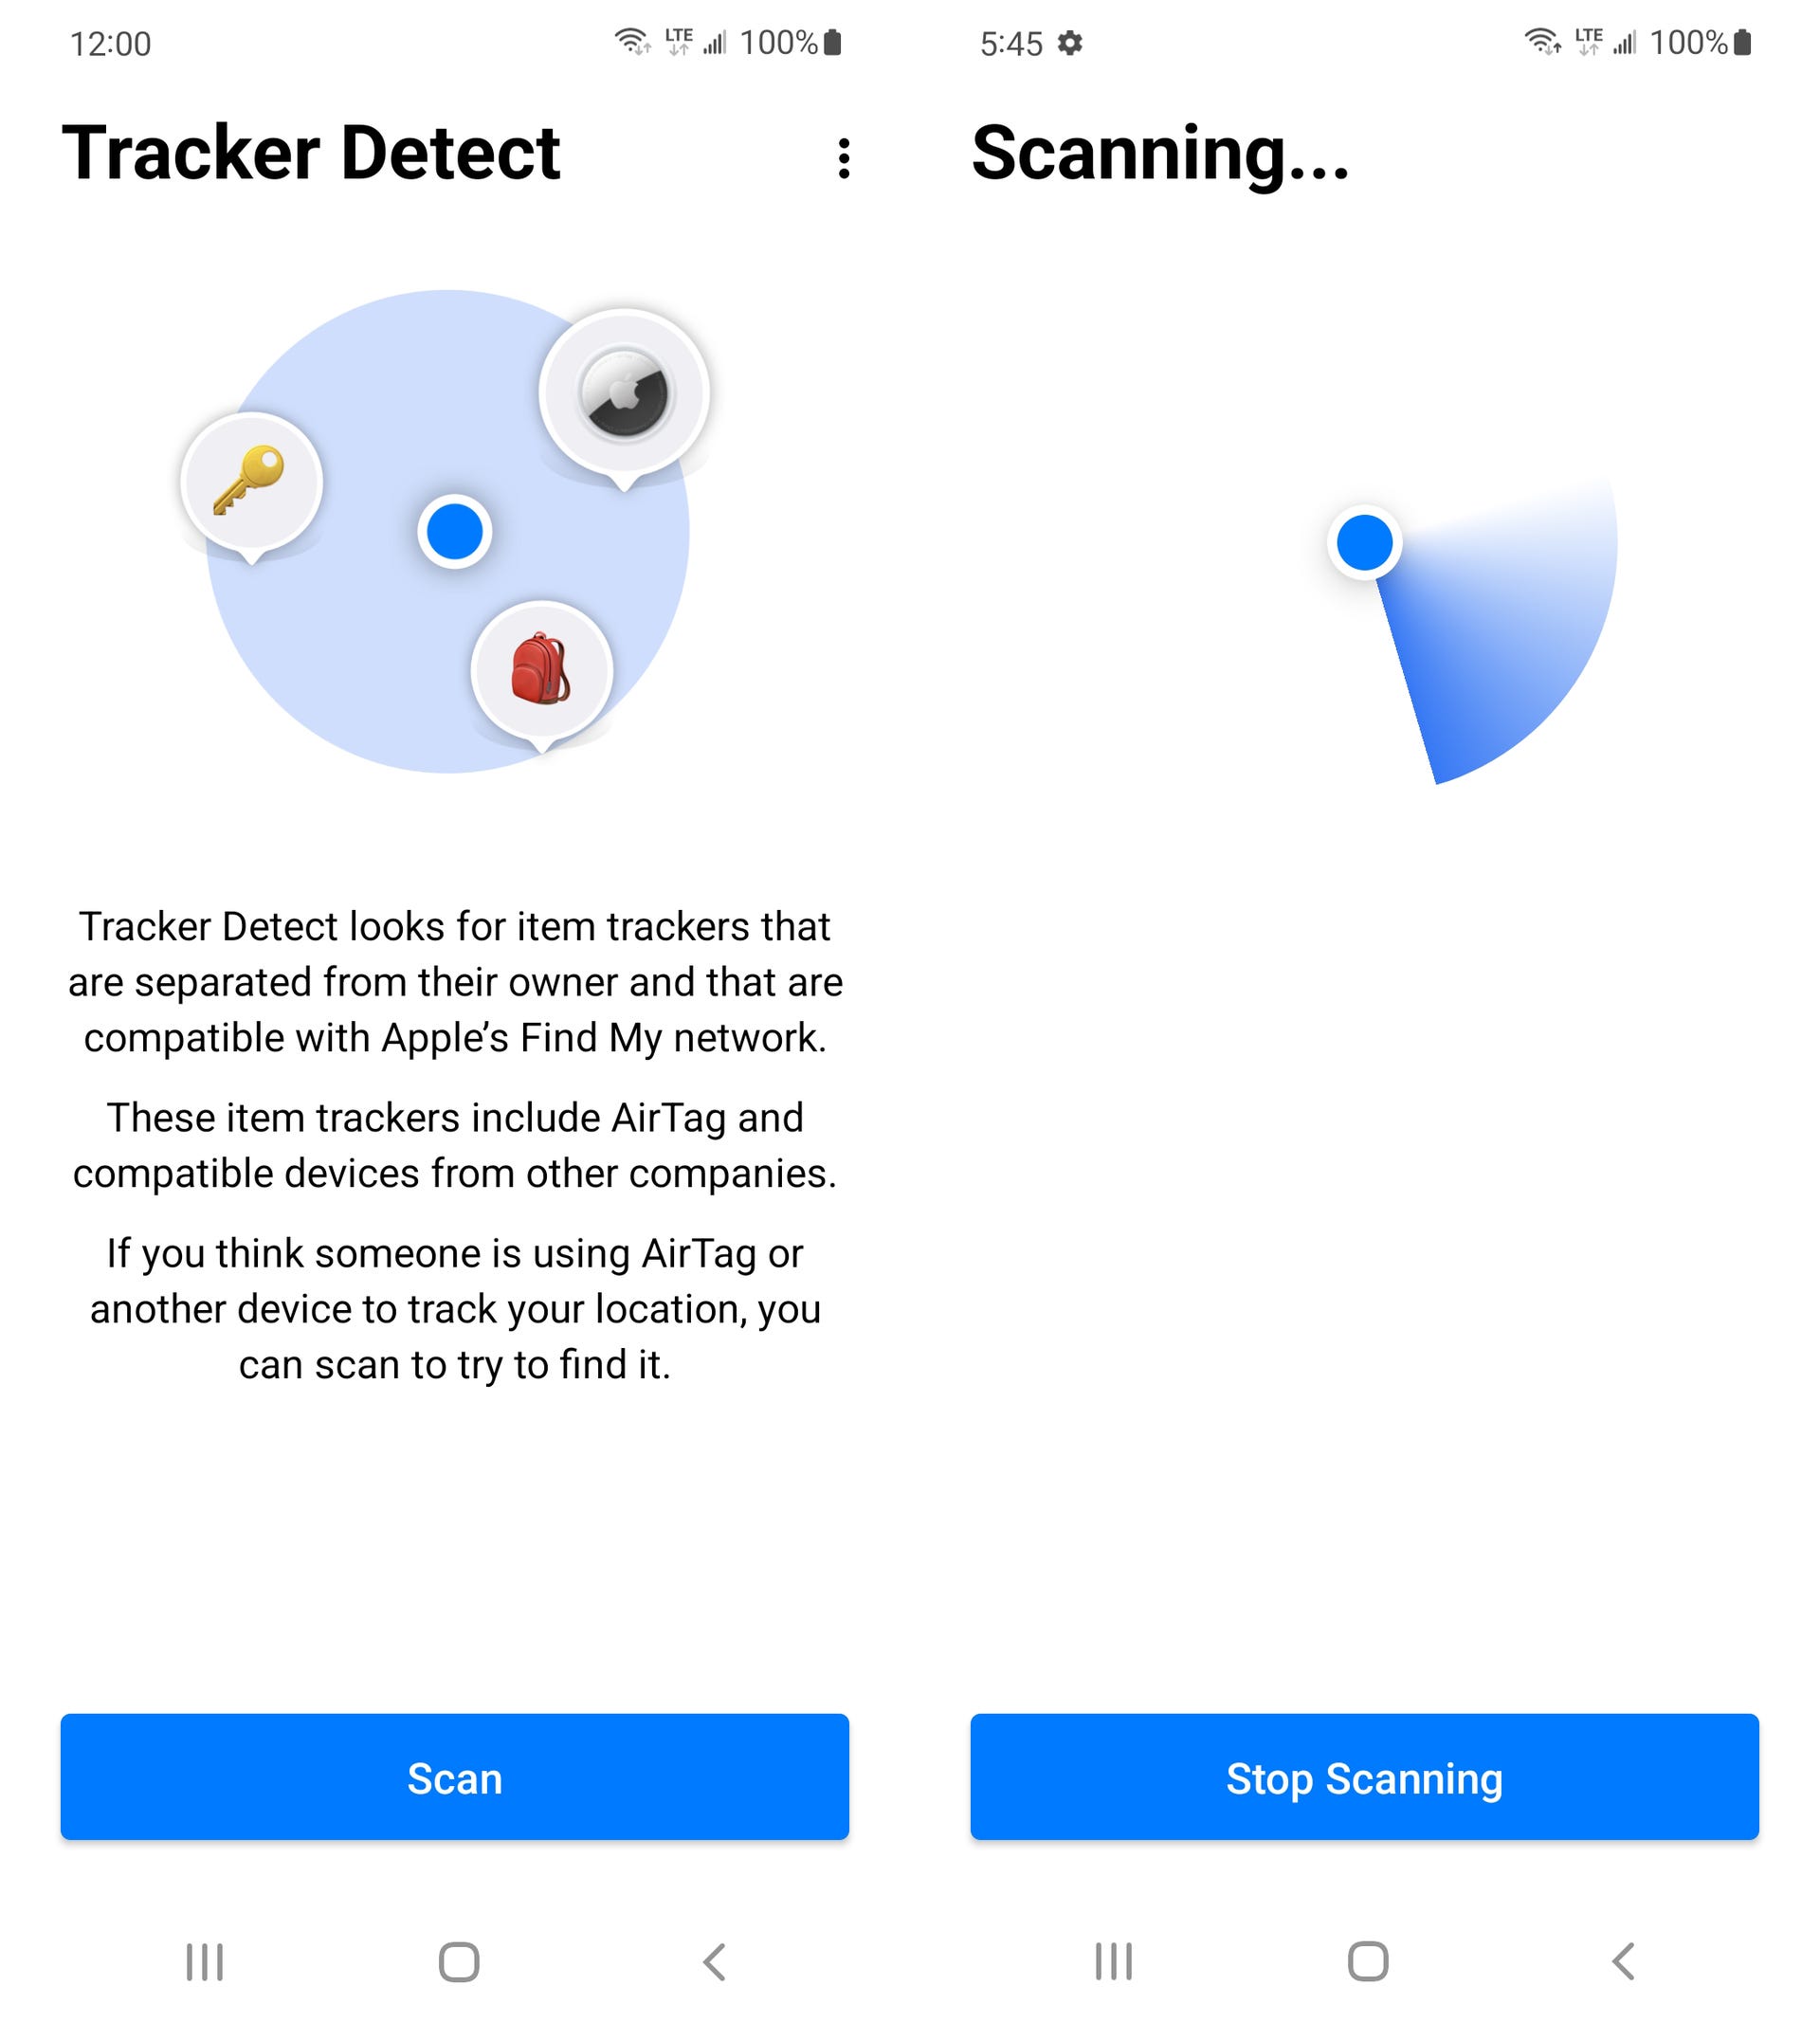 Screenshot showing Apple's Tracker Detect app